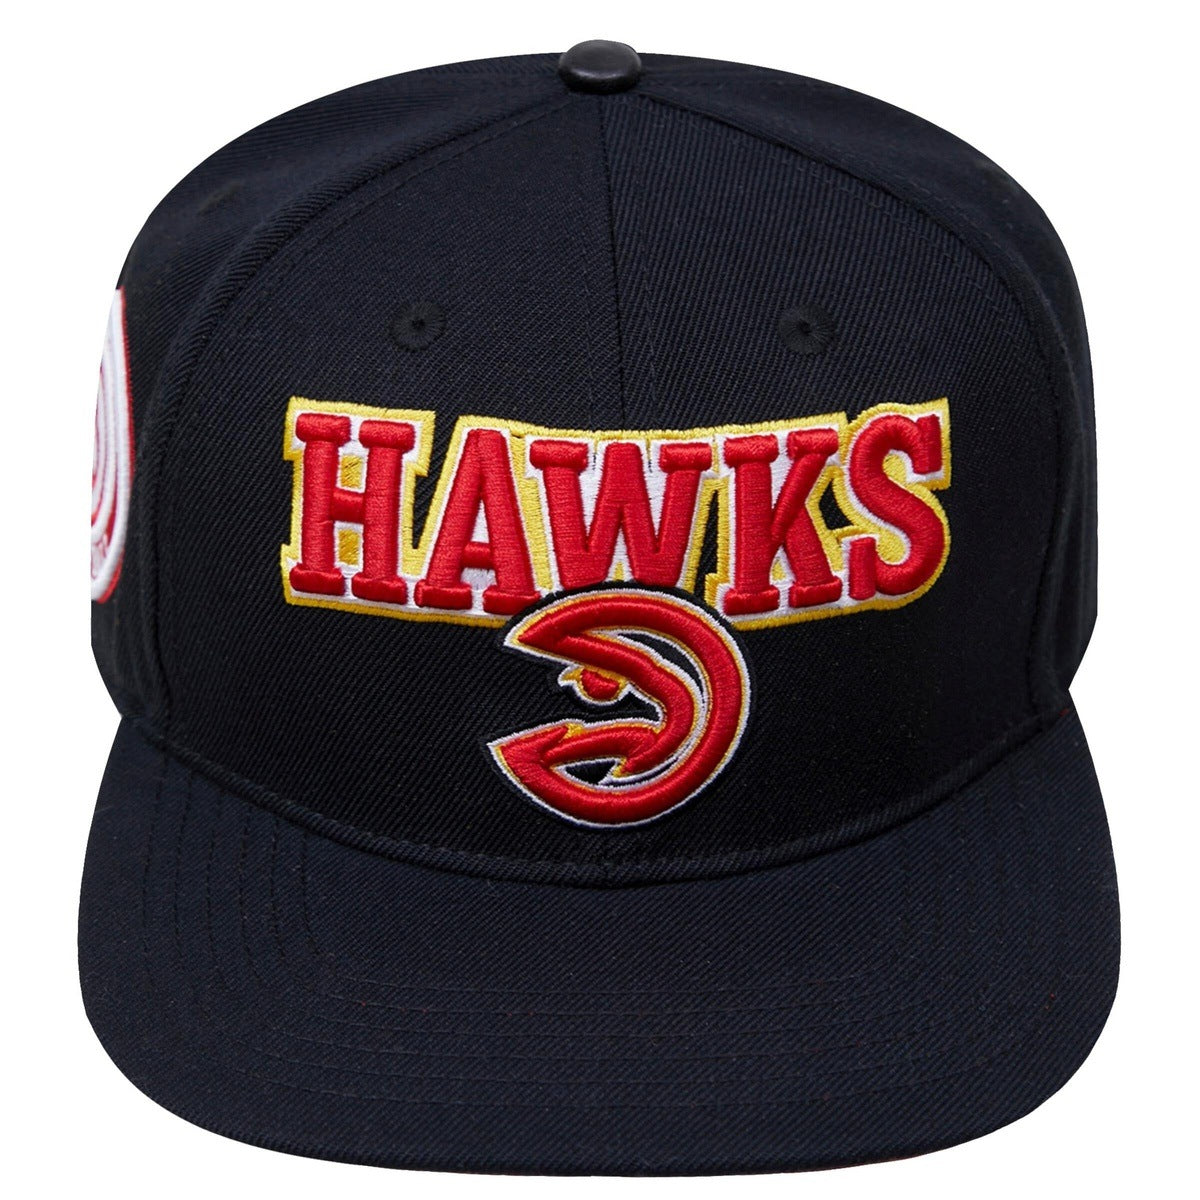 NBA ATLANTA HAWKS RETRO CLASSIC UNISEX LOGO WOOL SNAPBACK HAT (BLACK)